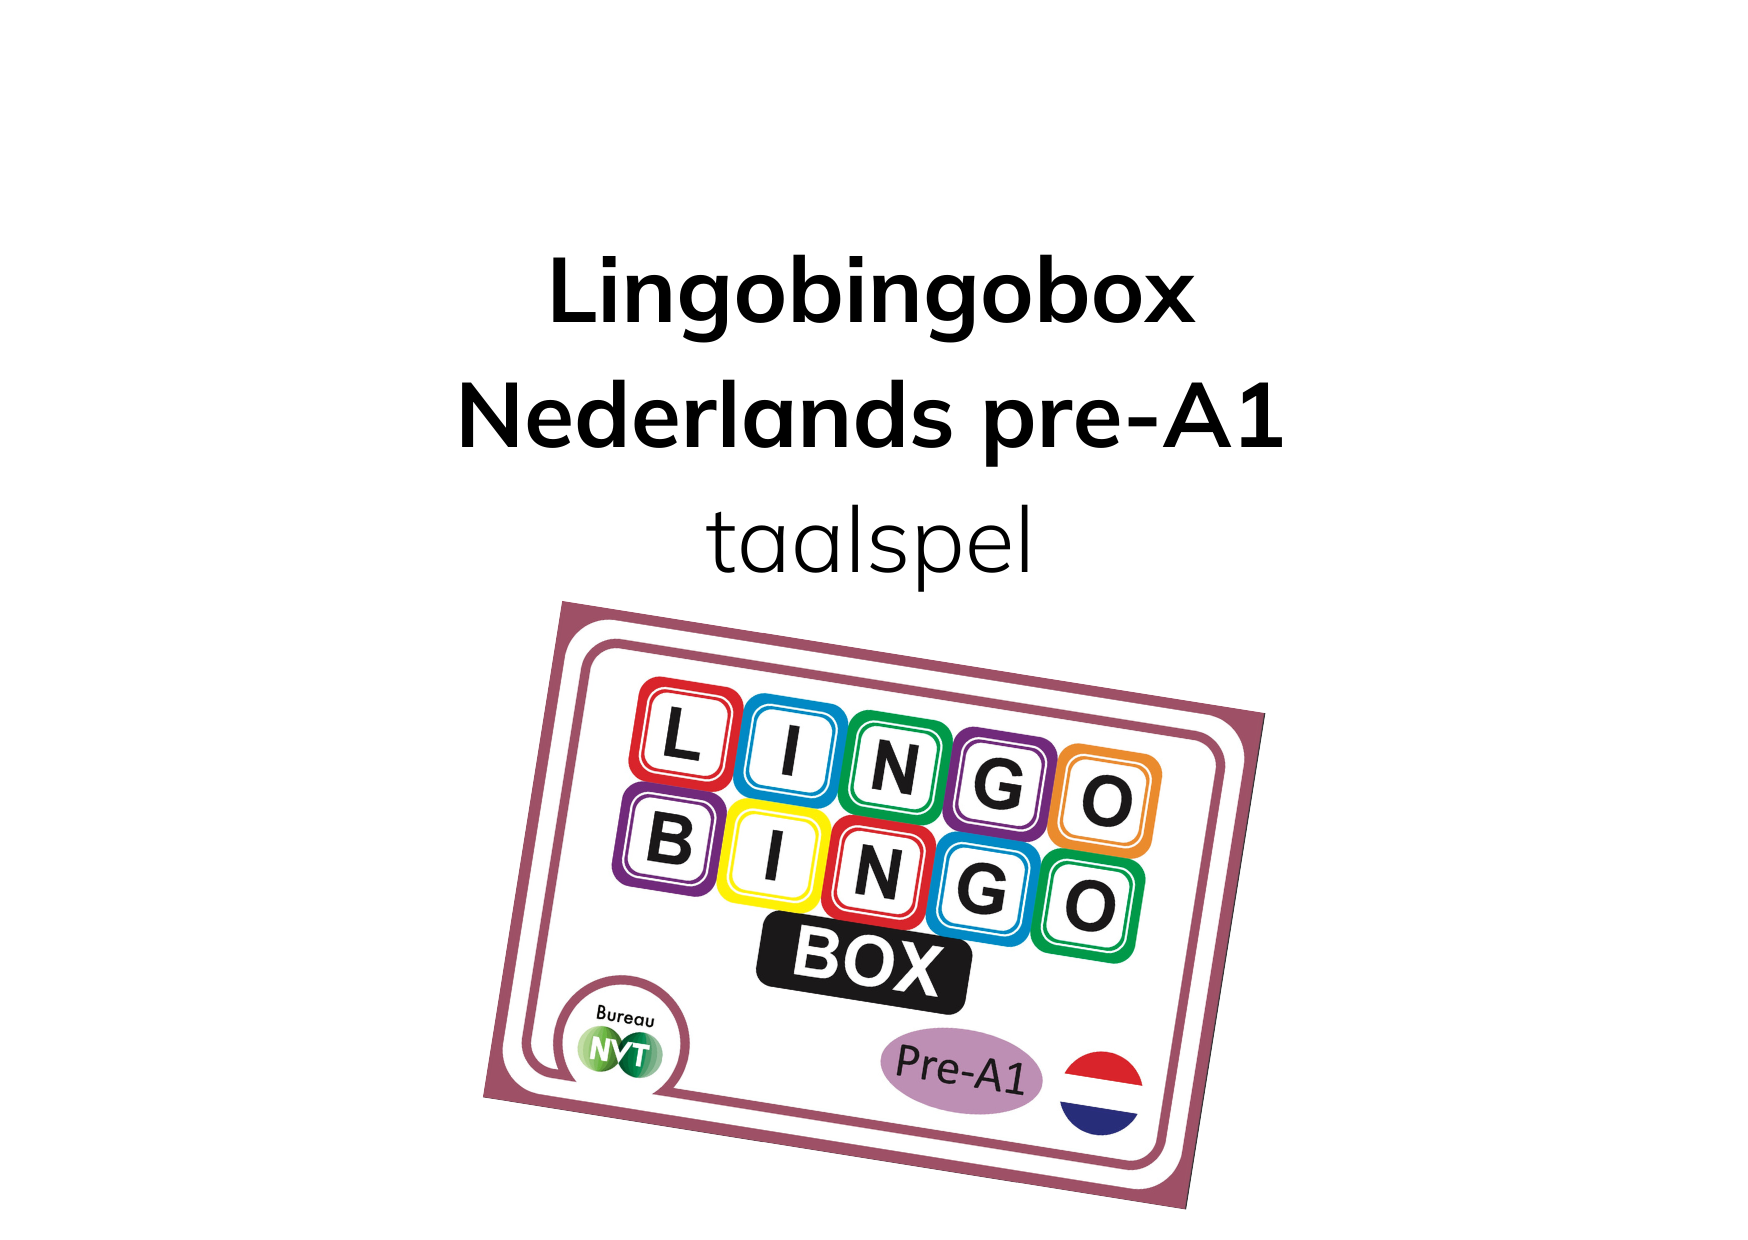 Lingobingobox NT2/NVT pre-A1